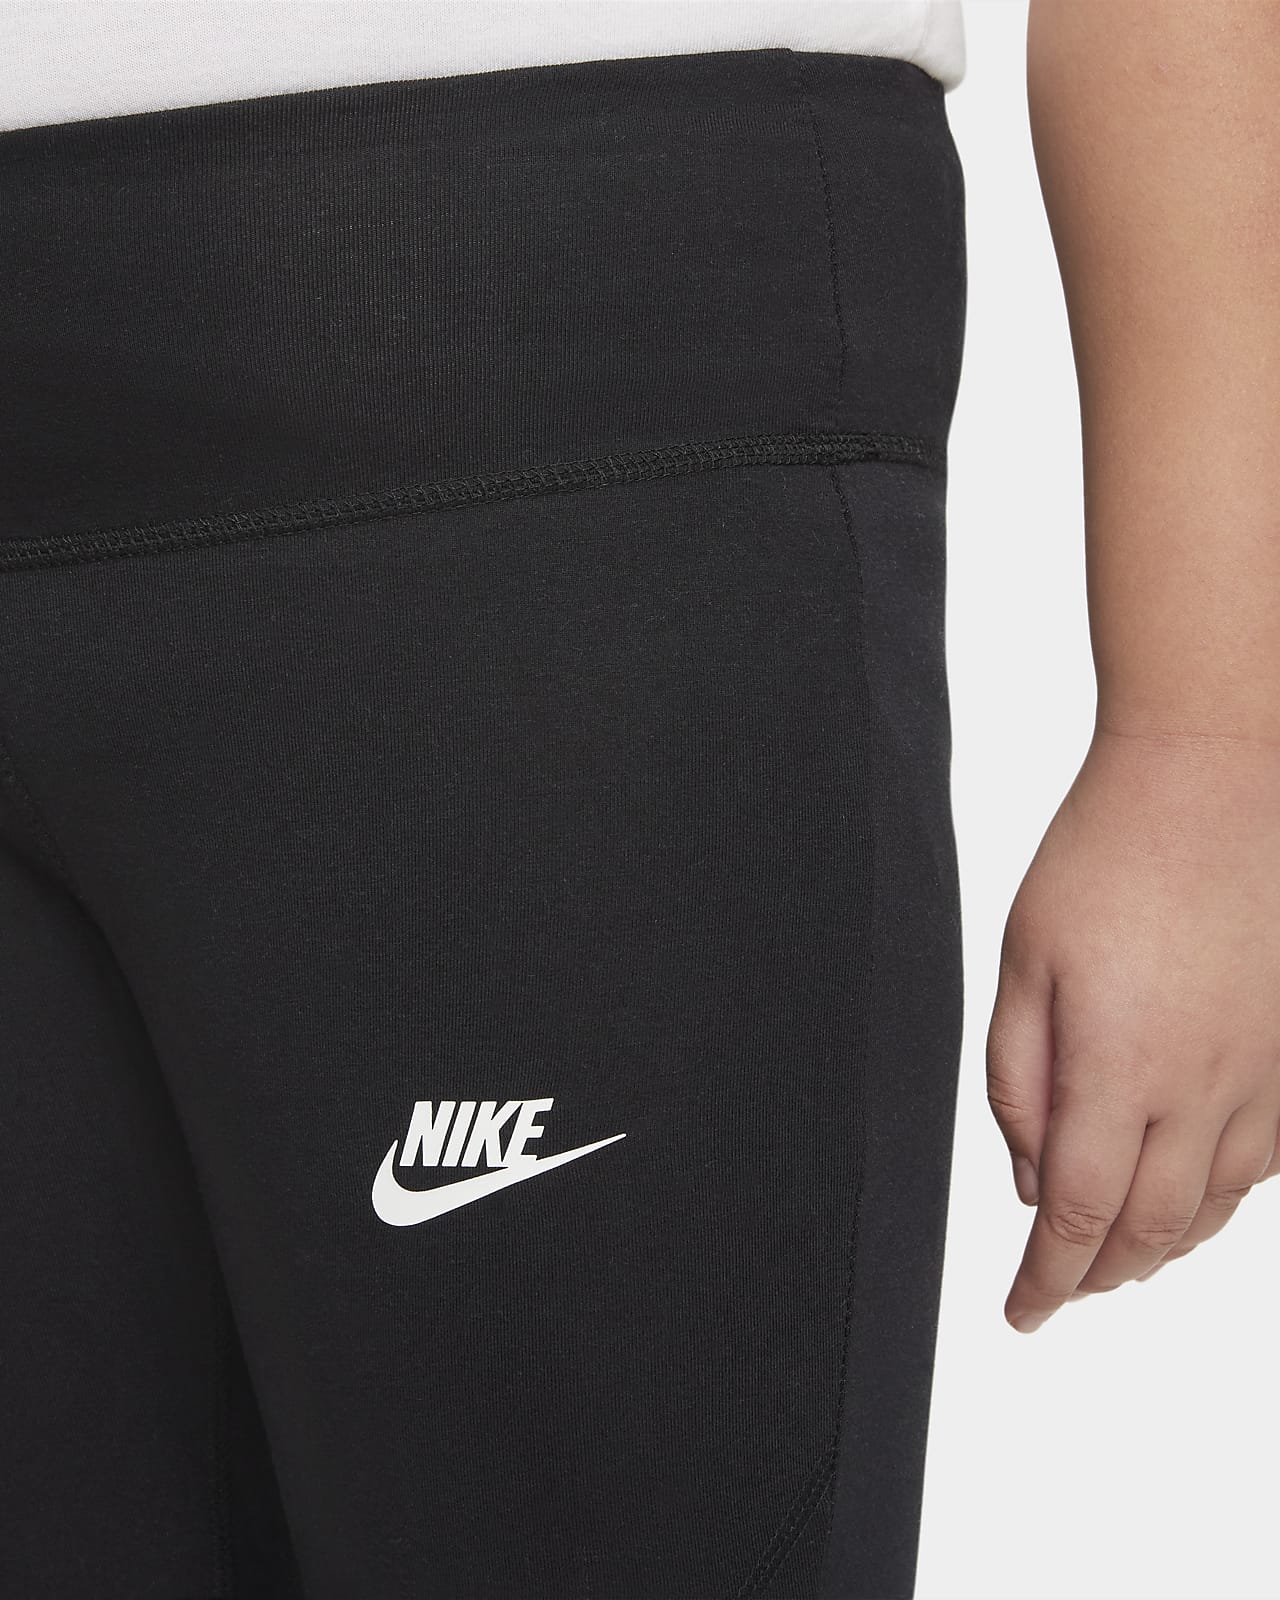 Nike Older Girls Favorites Trend Print High Waisted Legging